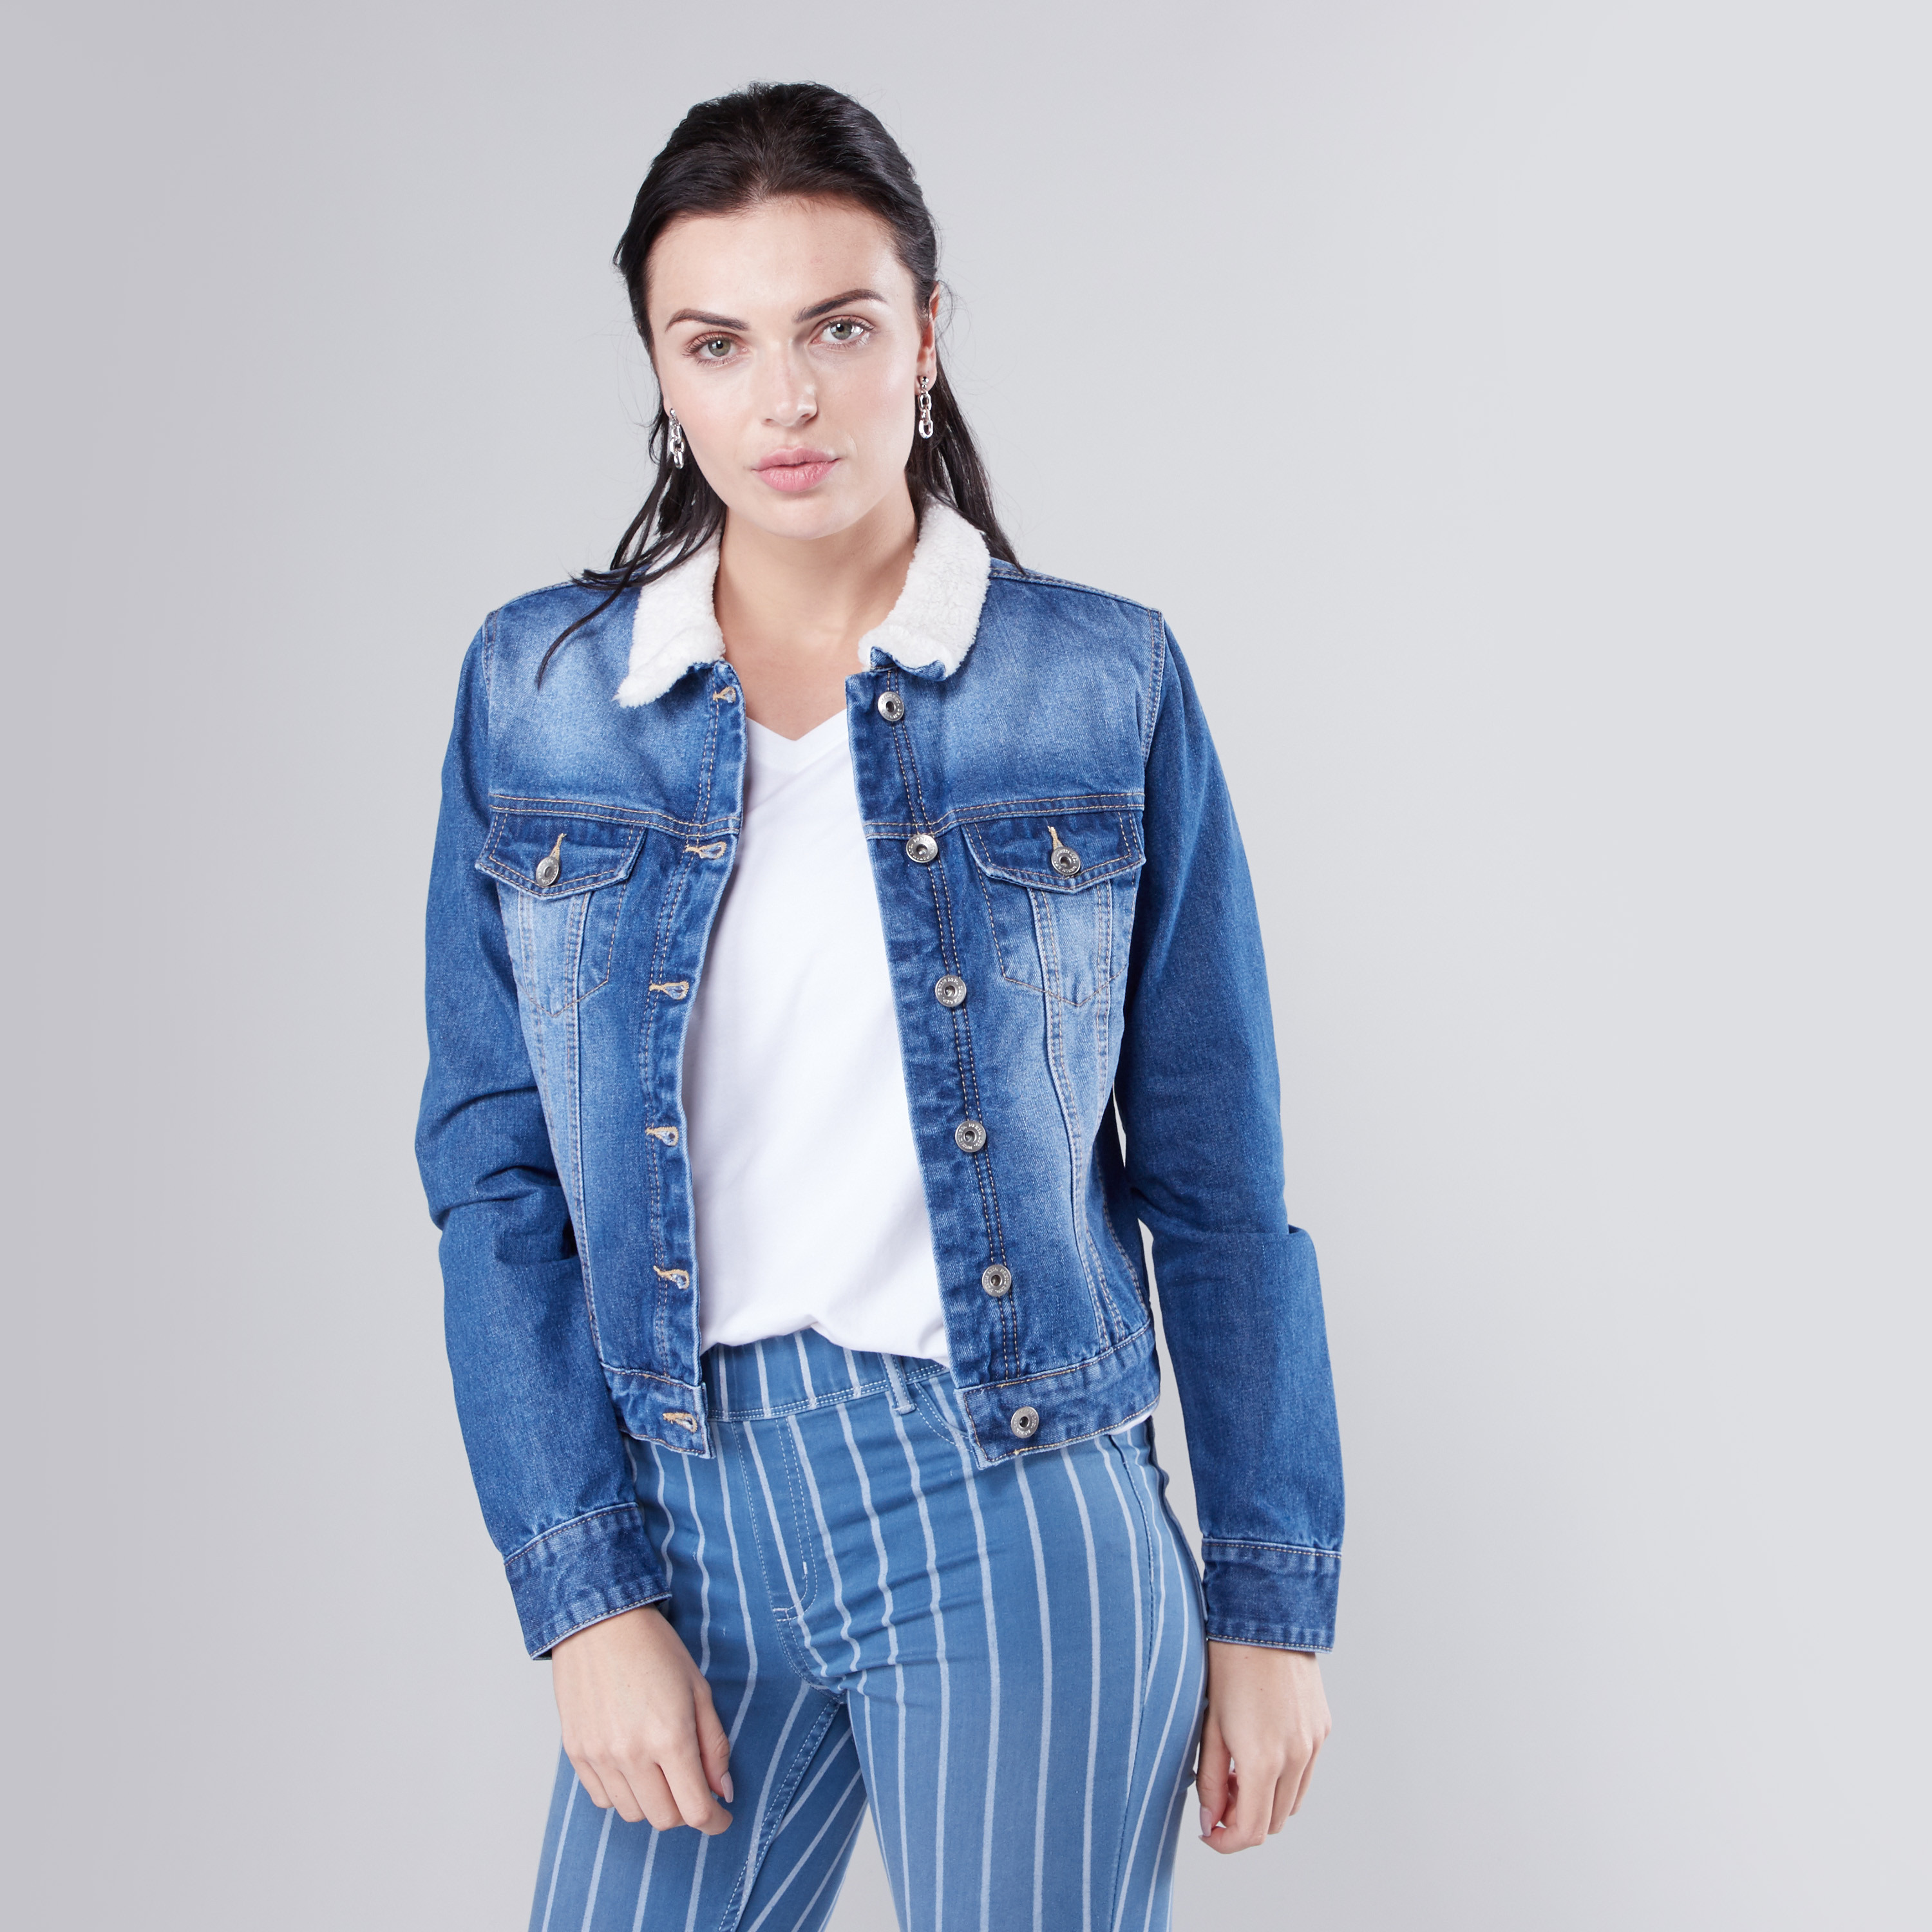 Stylish Women's Denim Jackets — Latest Trends & Looks | by Neon Police |  Medium